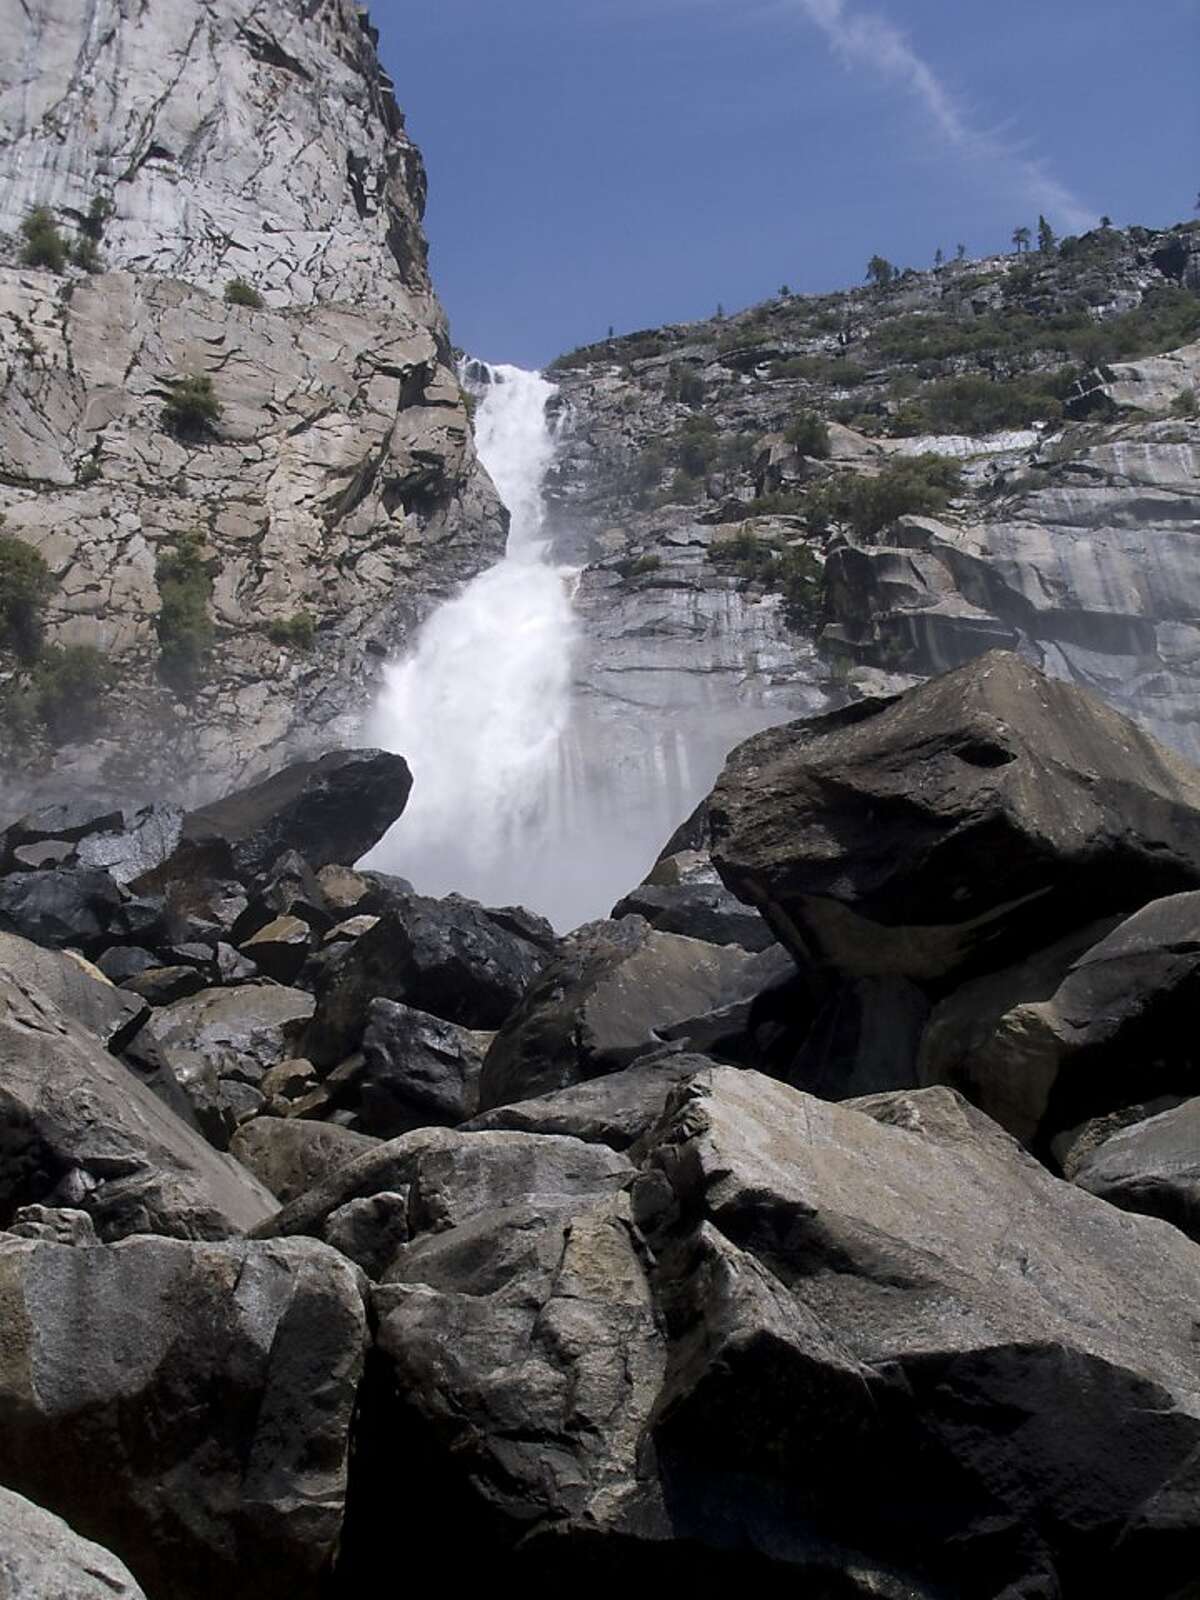 Wapama Falls at Hetch Hetchy resevoir. Please credit Jeffrey Turst, NPS Photo